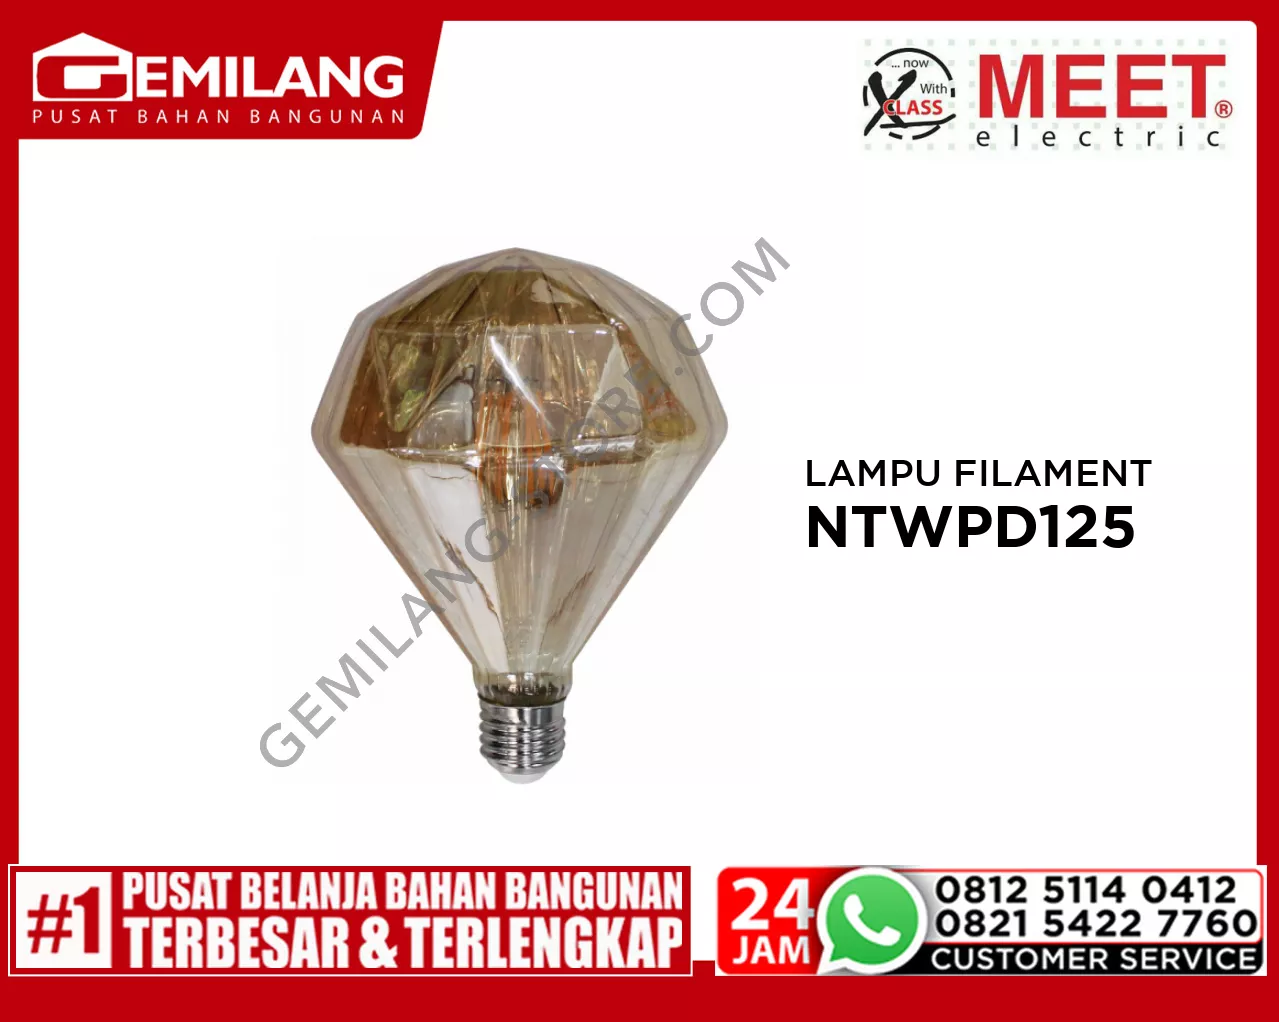 MEET LAMPU FILAMENT LED 2300K E27 6w NTWPD125